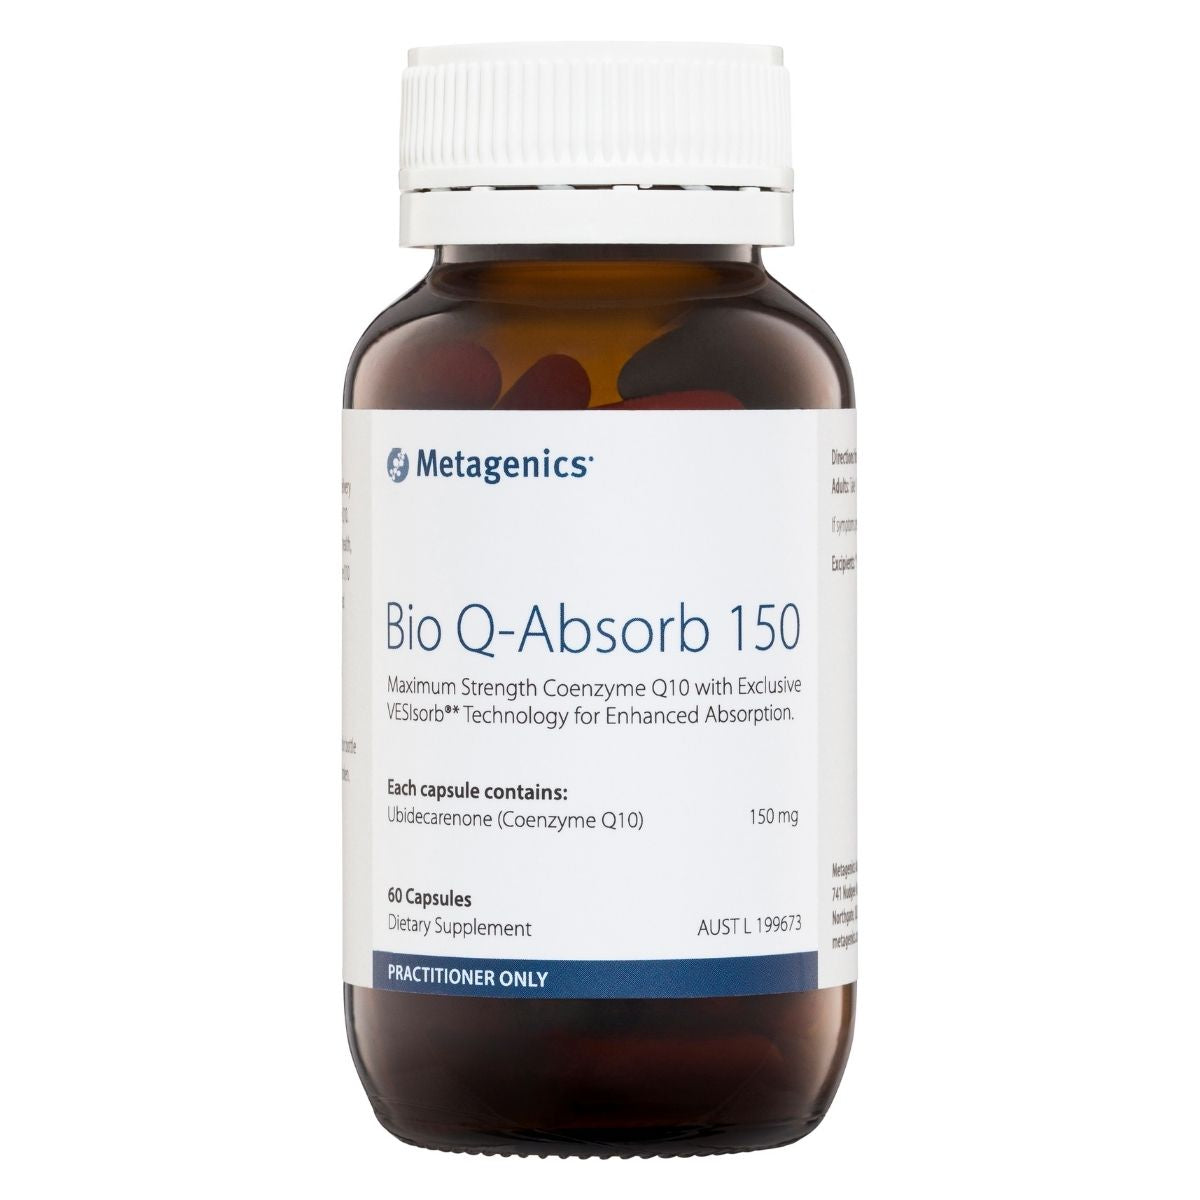 Metagenics Bio Q-Absorb 150 60 capsules | Vitality and Wellness Centre